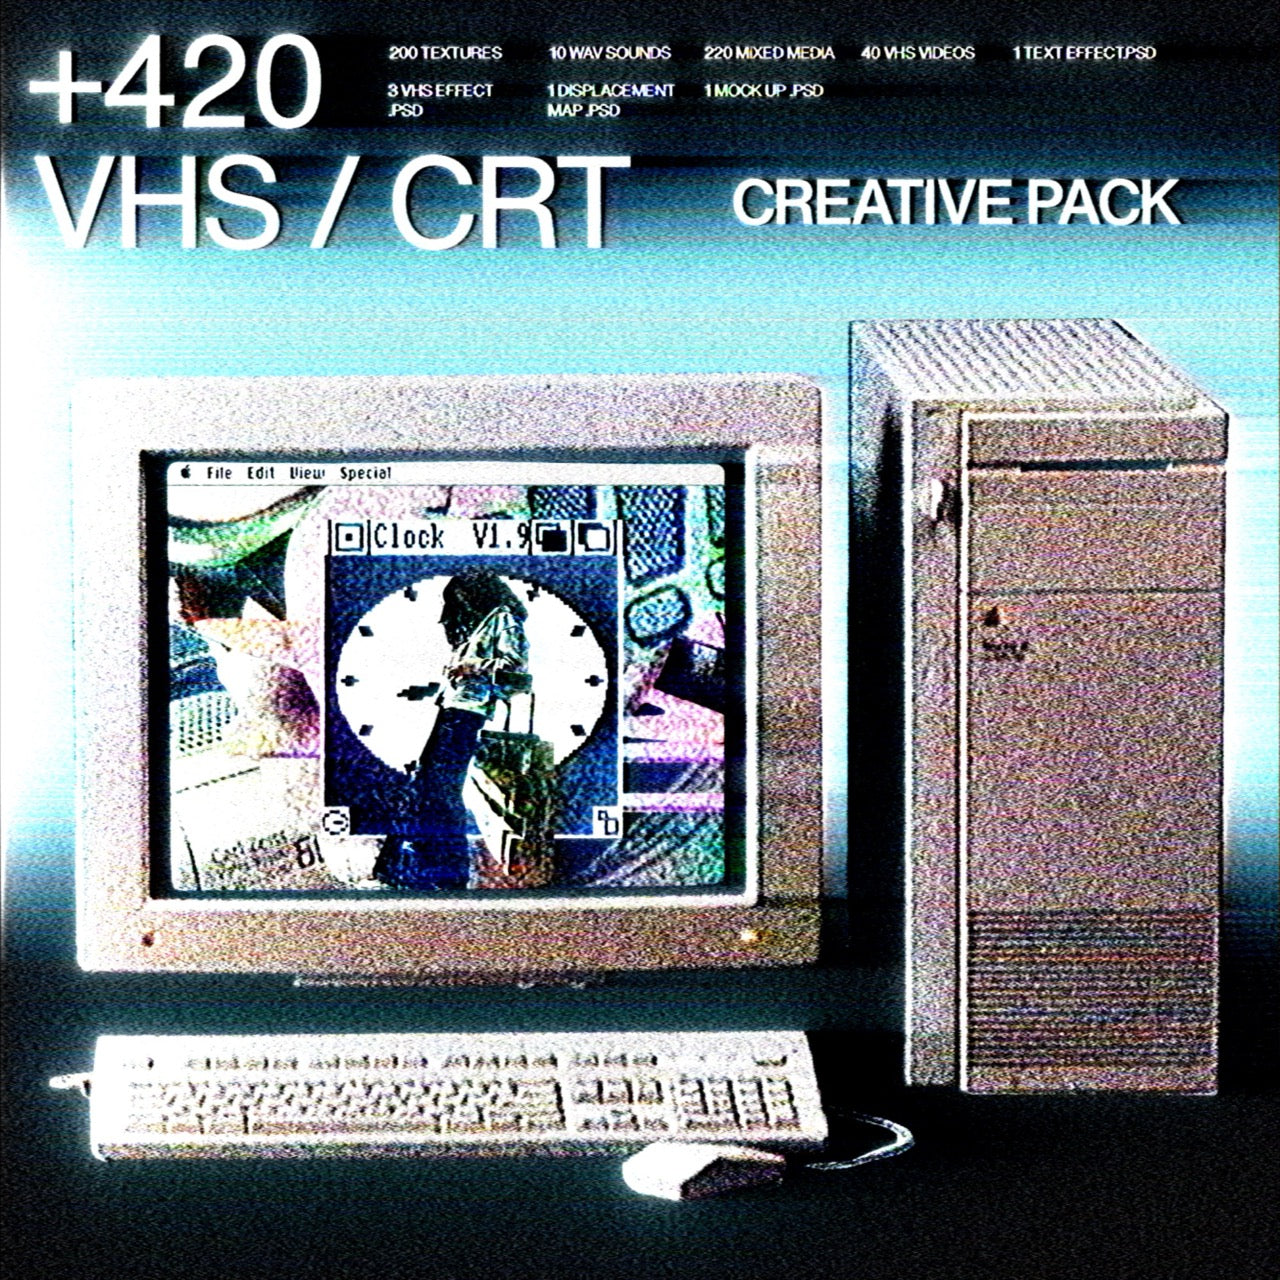 +420 VHS/CRT CREATIVE PACK (Textures, Effects, Sounds..) HYTRAPE